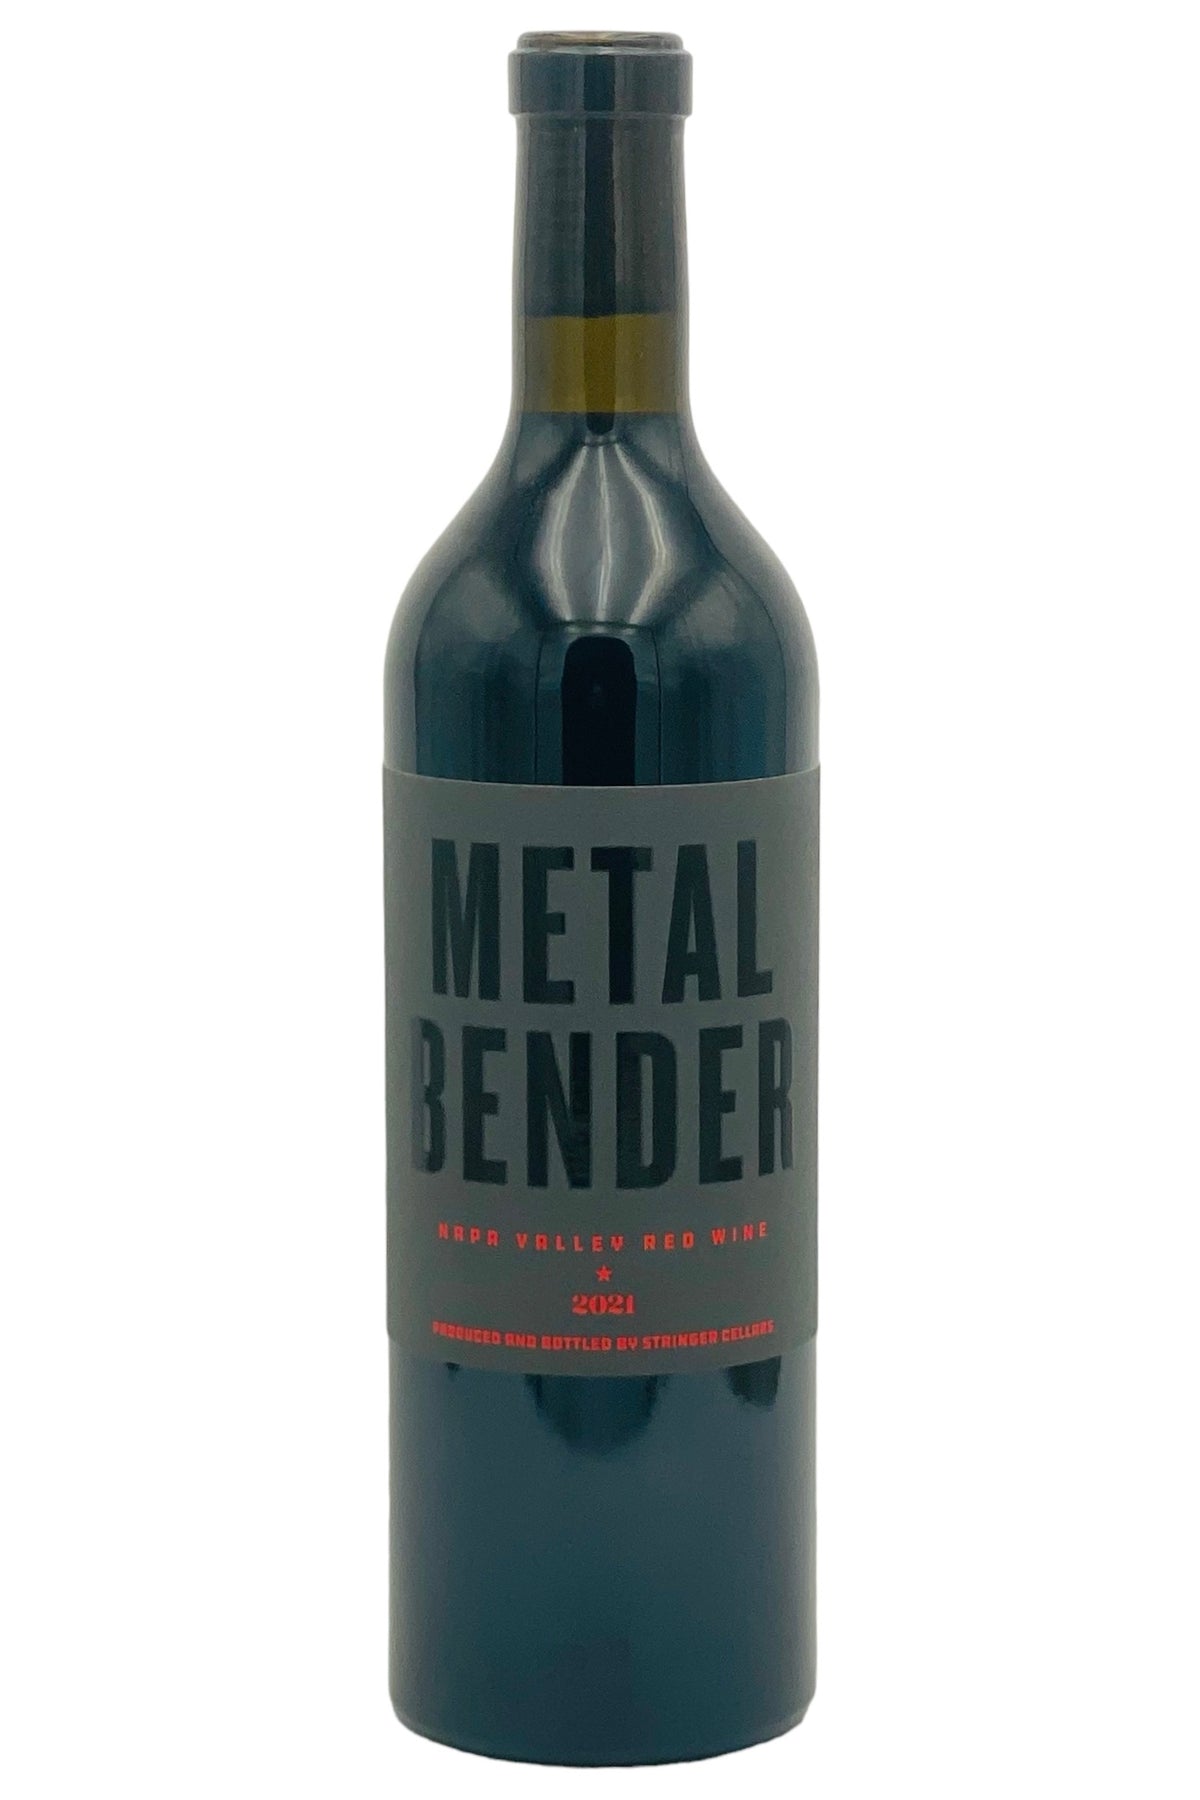 Stringer Cellars 2021 &quot;Metal Bender&quot; Red Blend Napa Valley